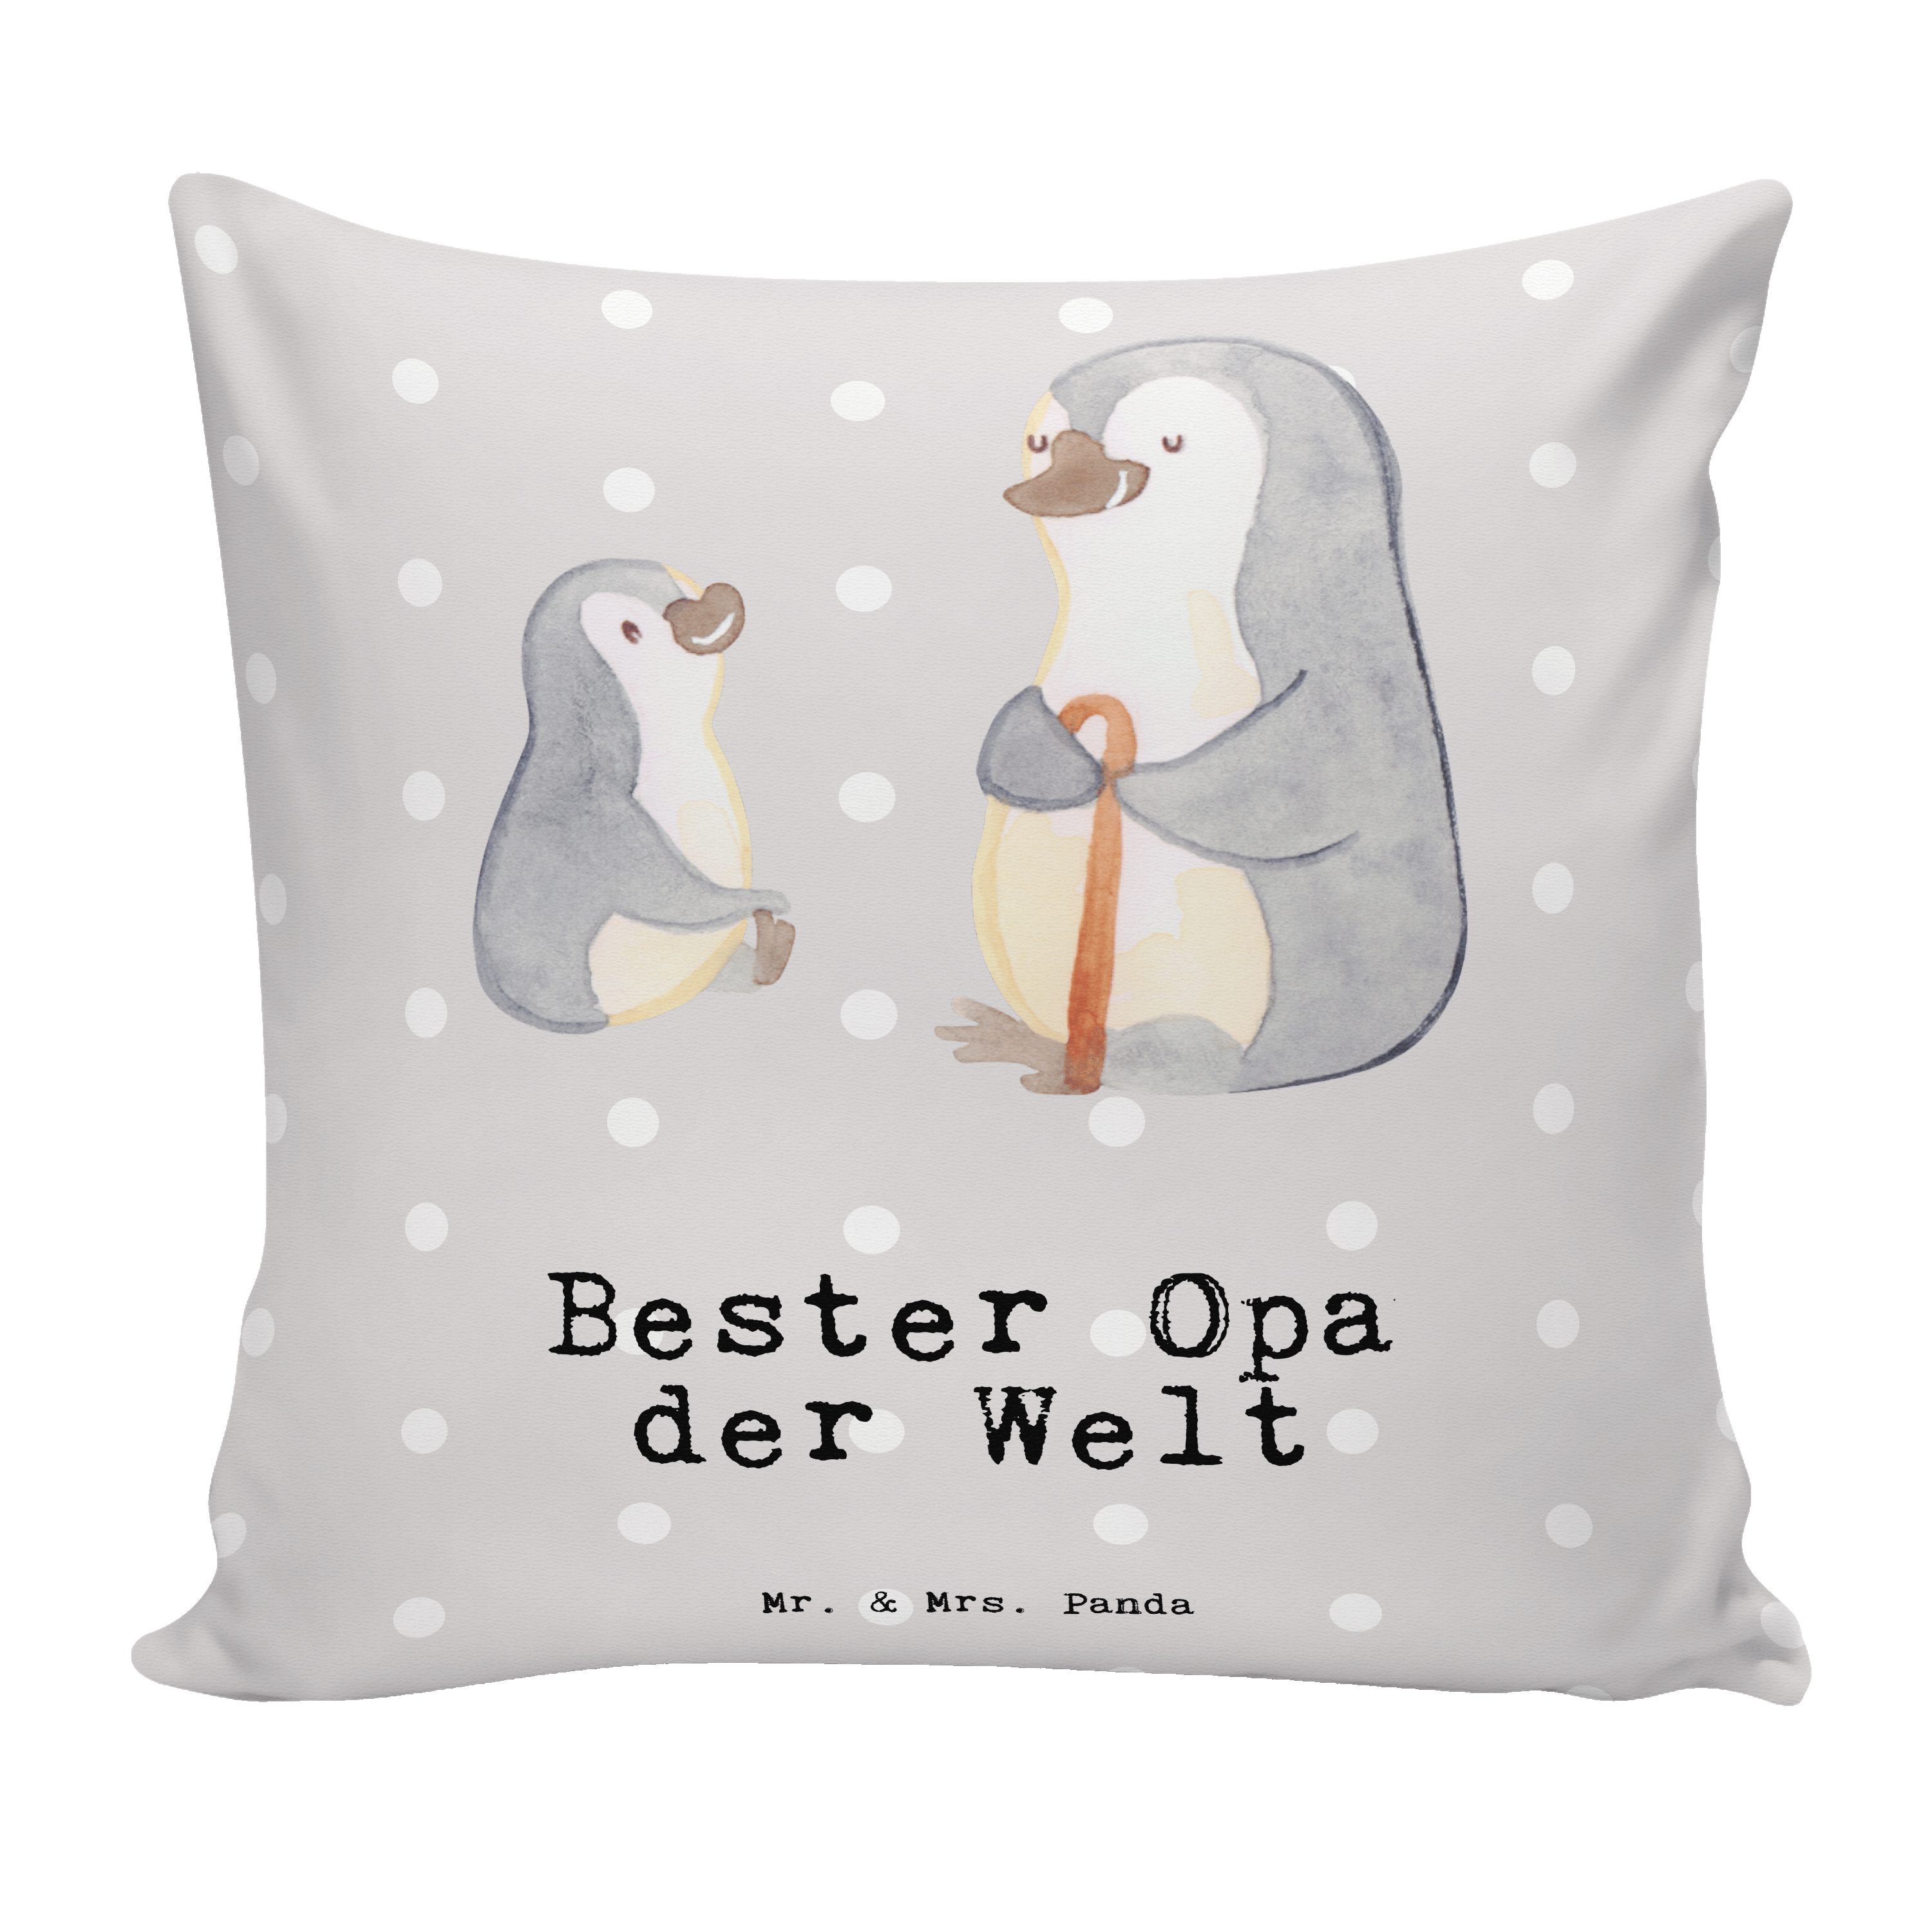 Mr. & Mrs. Panda Dekokissen Pinguin Bester Opa der Welt - Grau Pastell - Geschenk, Geburtstag, Op